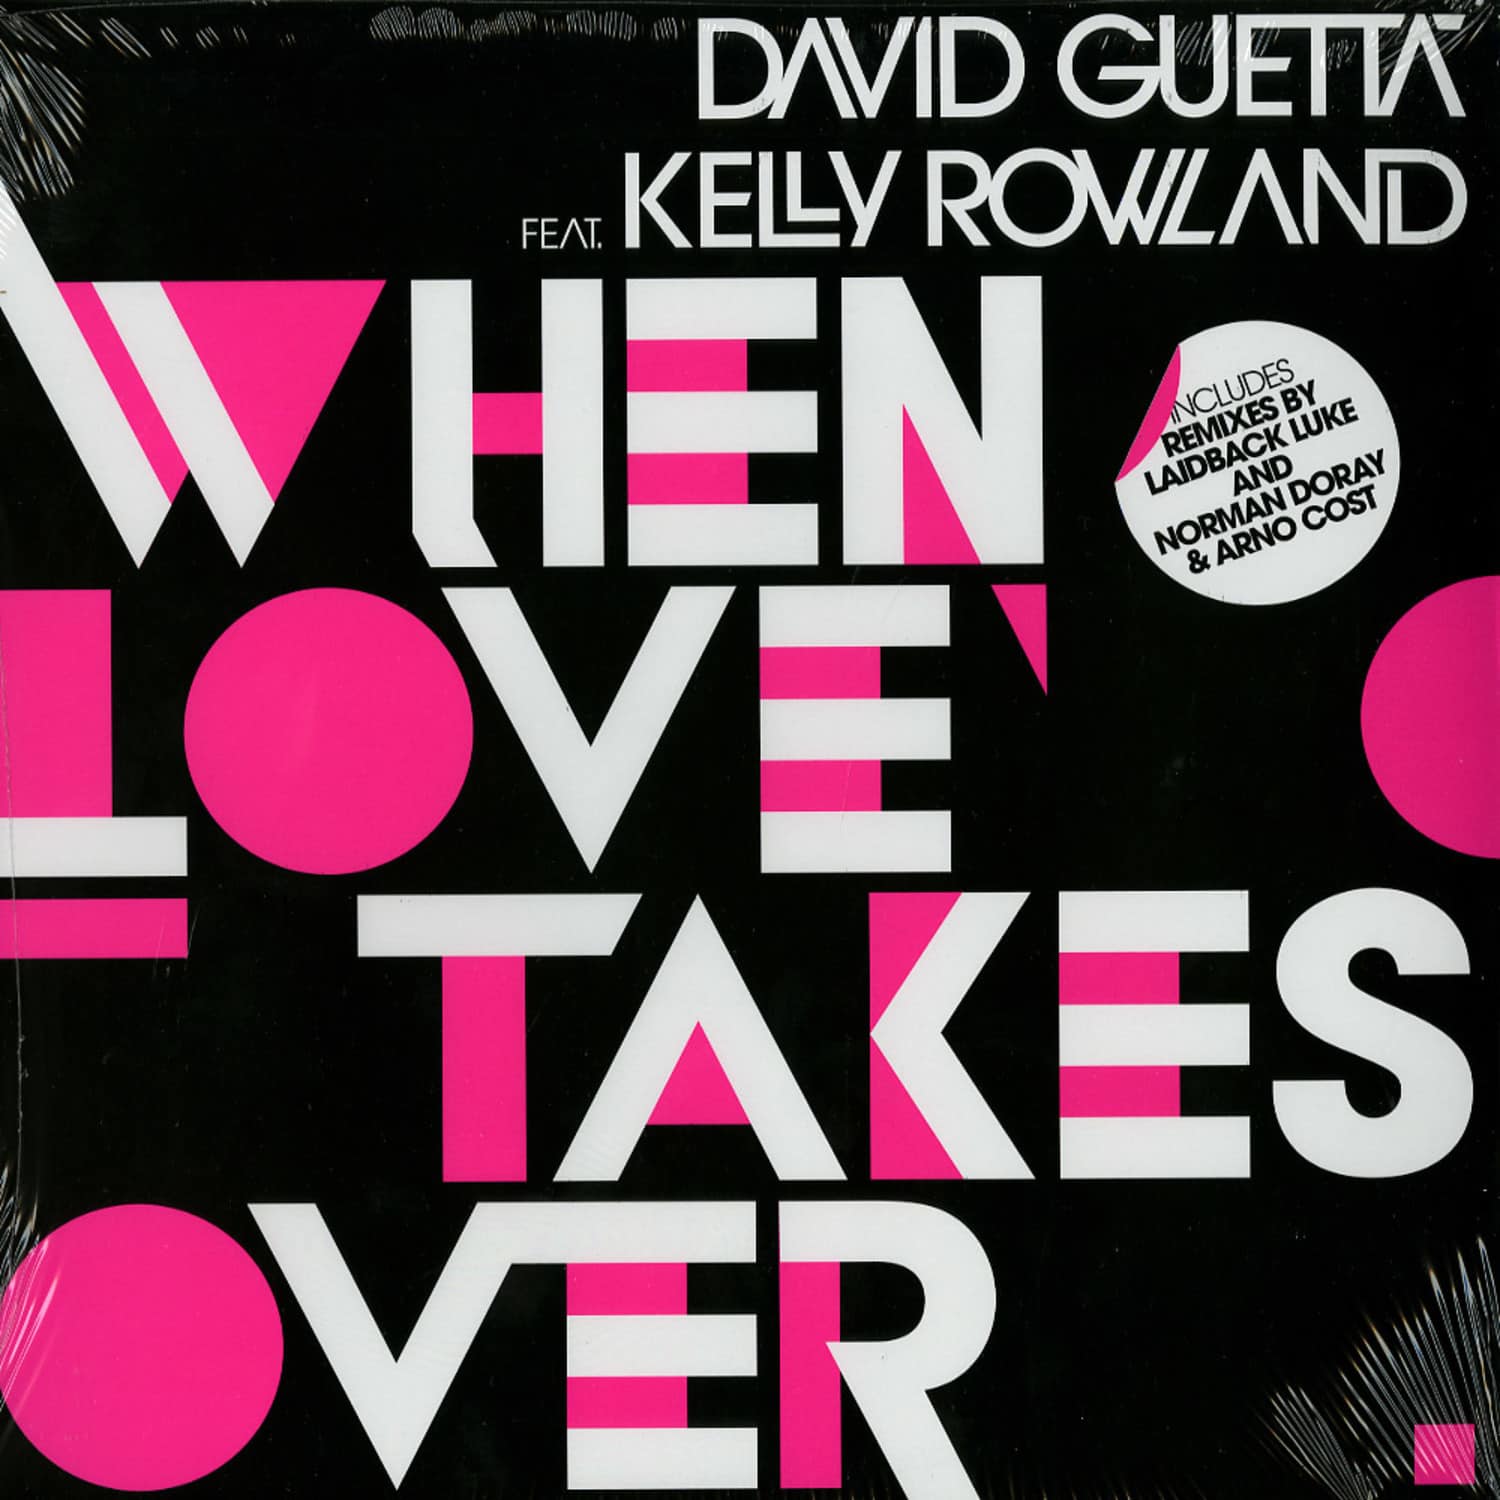 Take a love to go. When Love takes over Келли Роуленд. David Guetta feat. Kelly Rowland - when Love takes over. David Guetta Love. David Guetta виниловая пластинка.